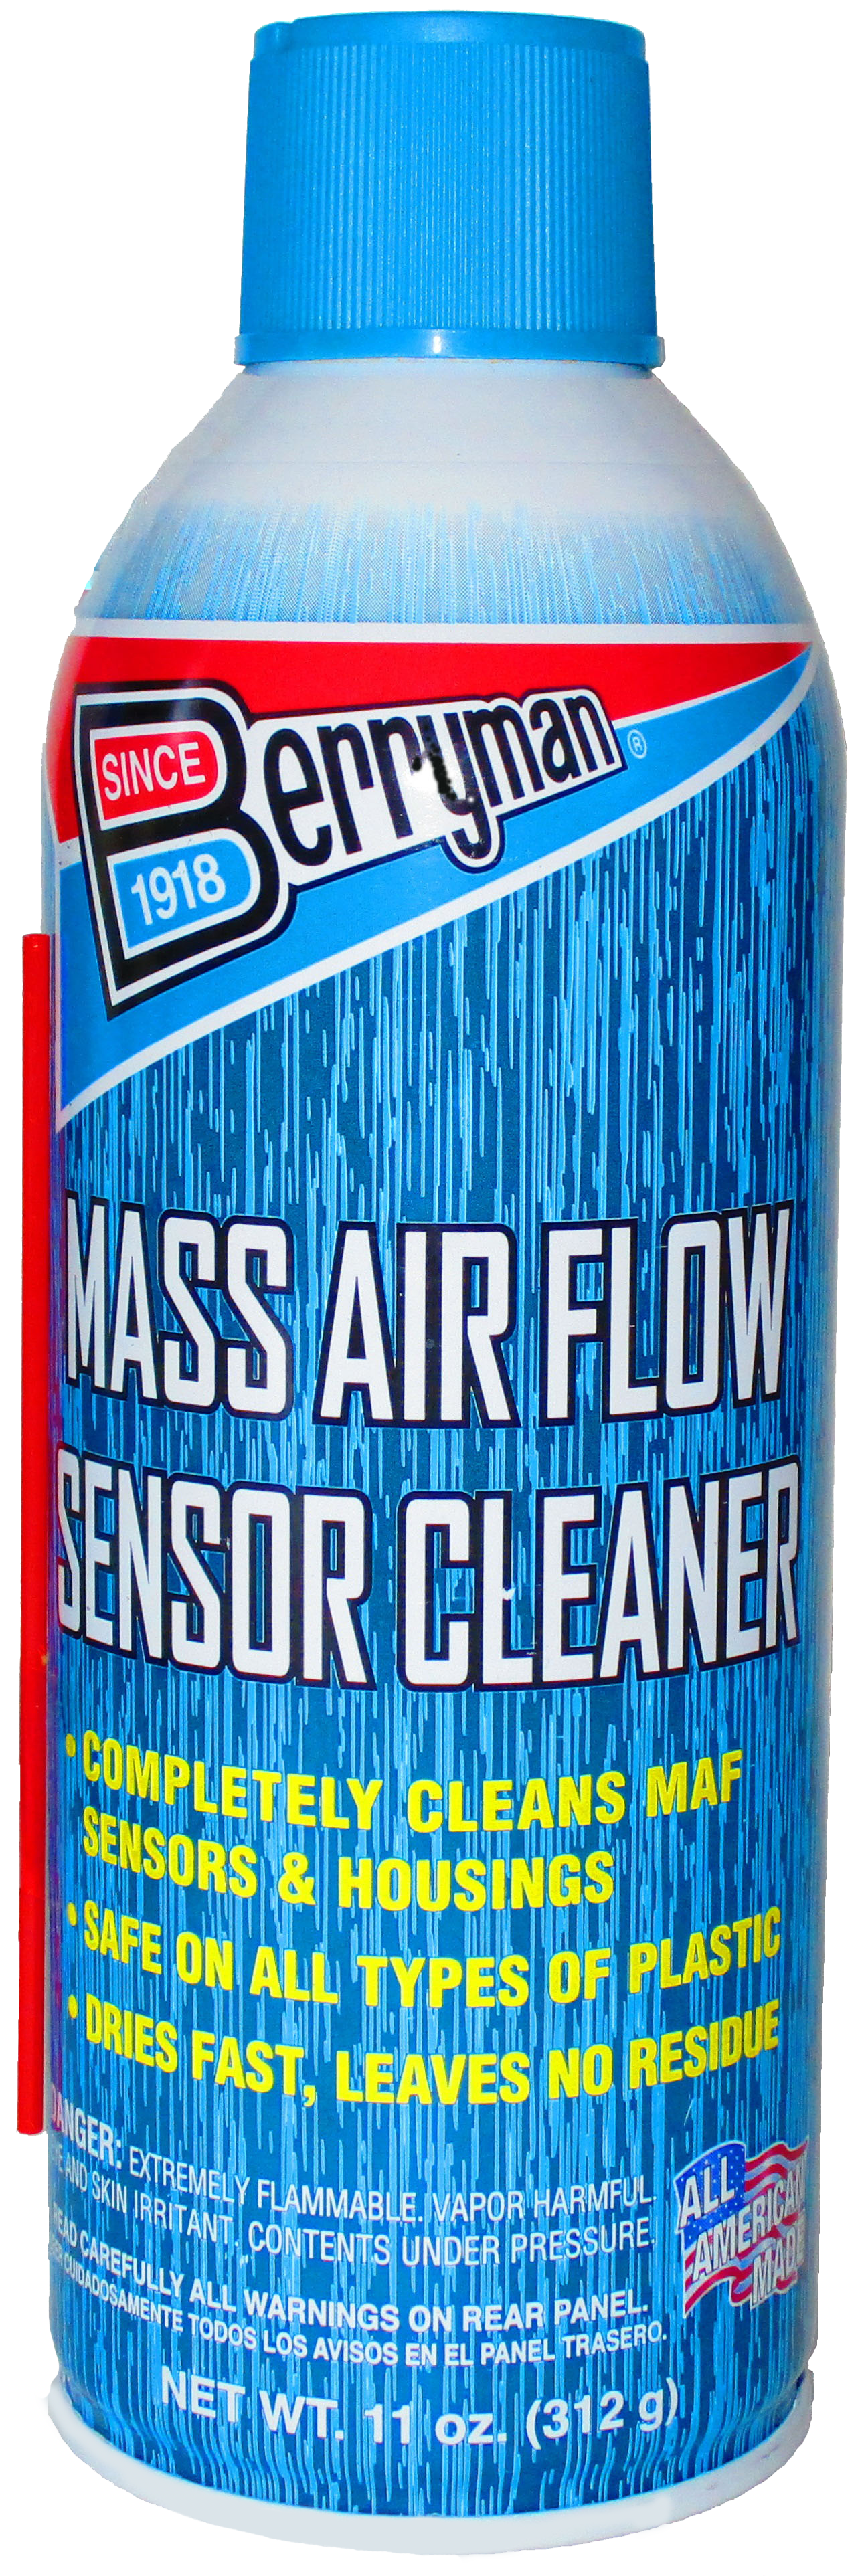 master air flow sensor cleaner